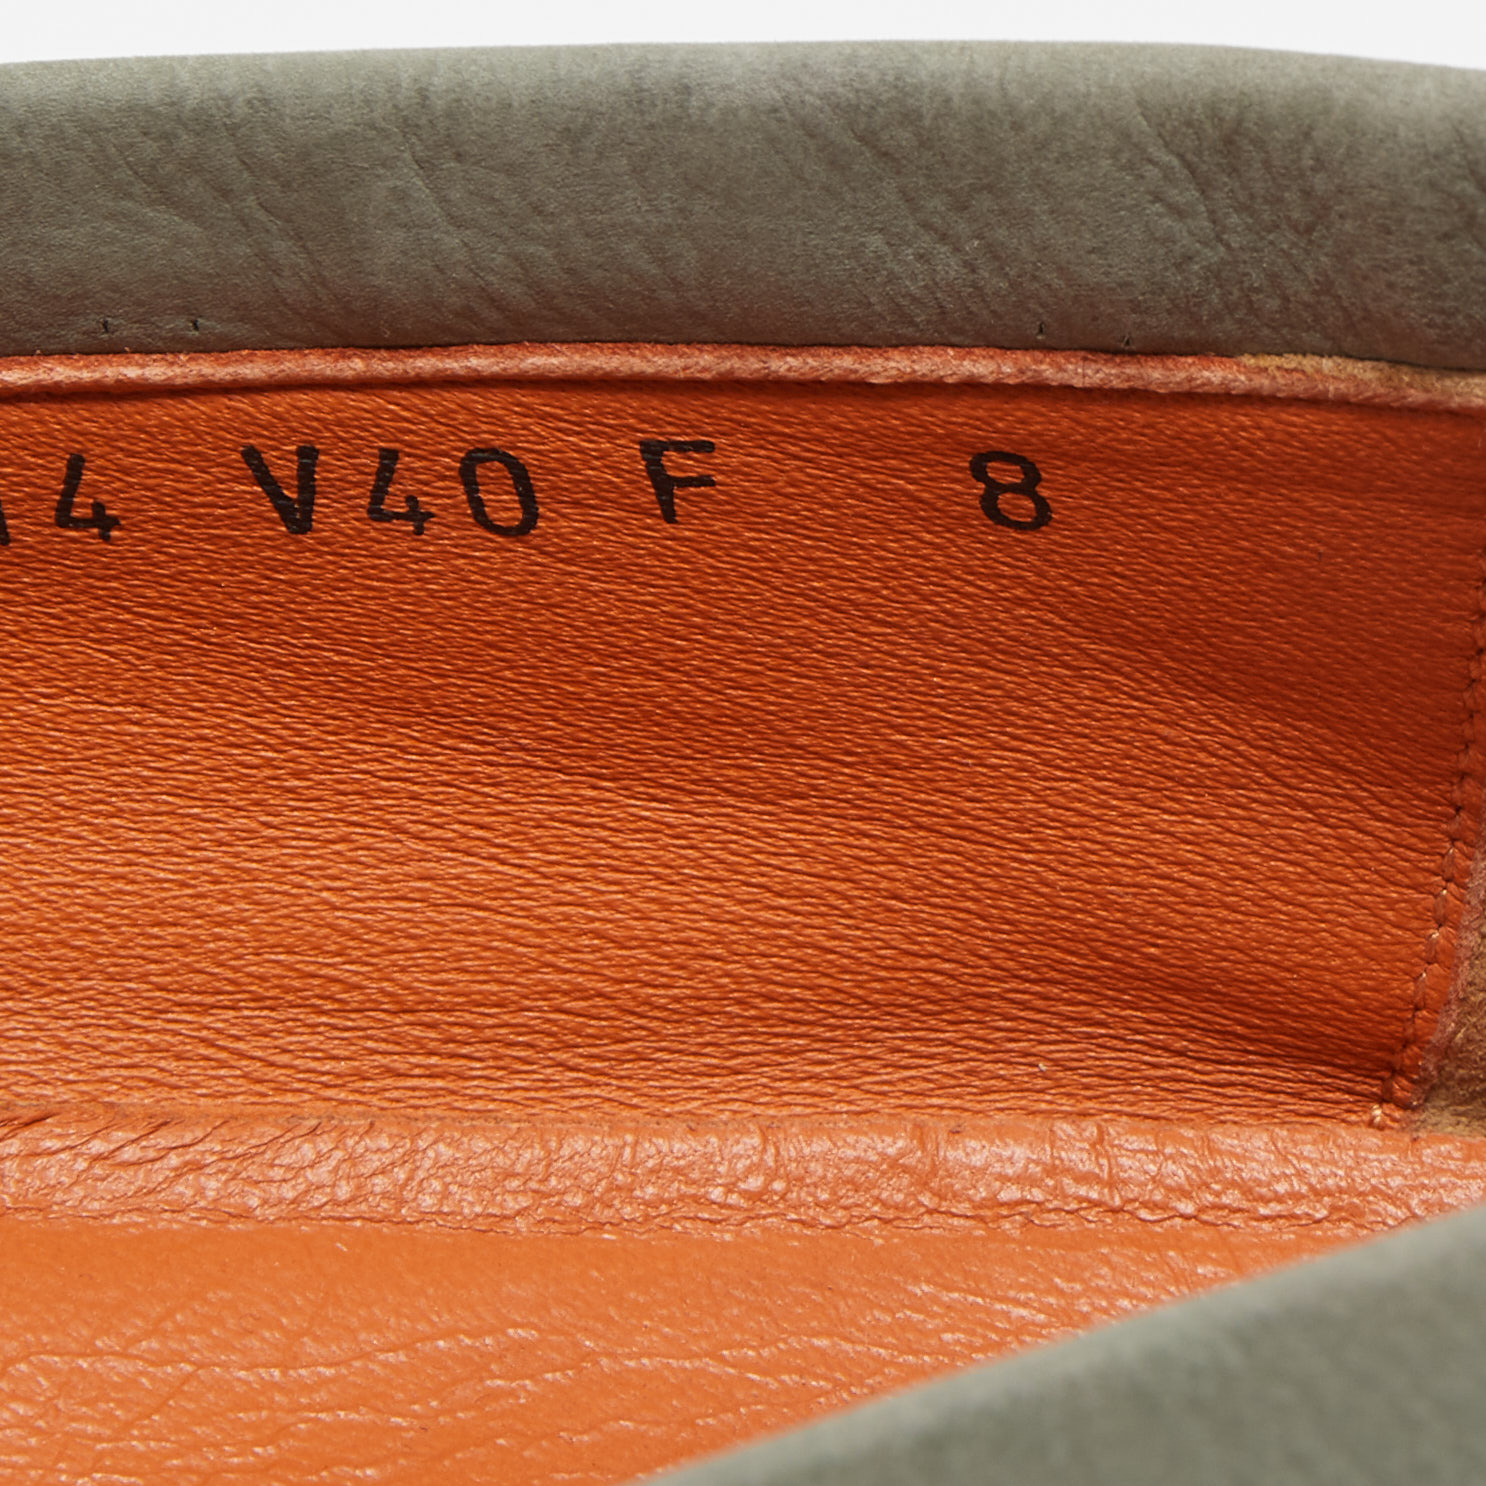 Santoni Green Leather Slip On Loafers Size 42